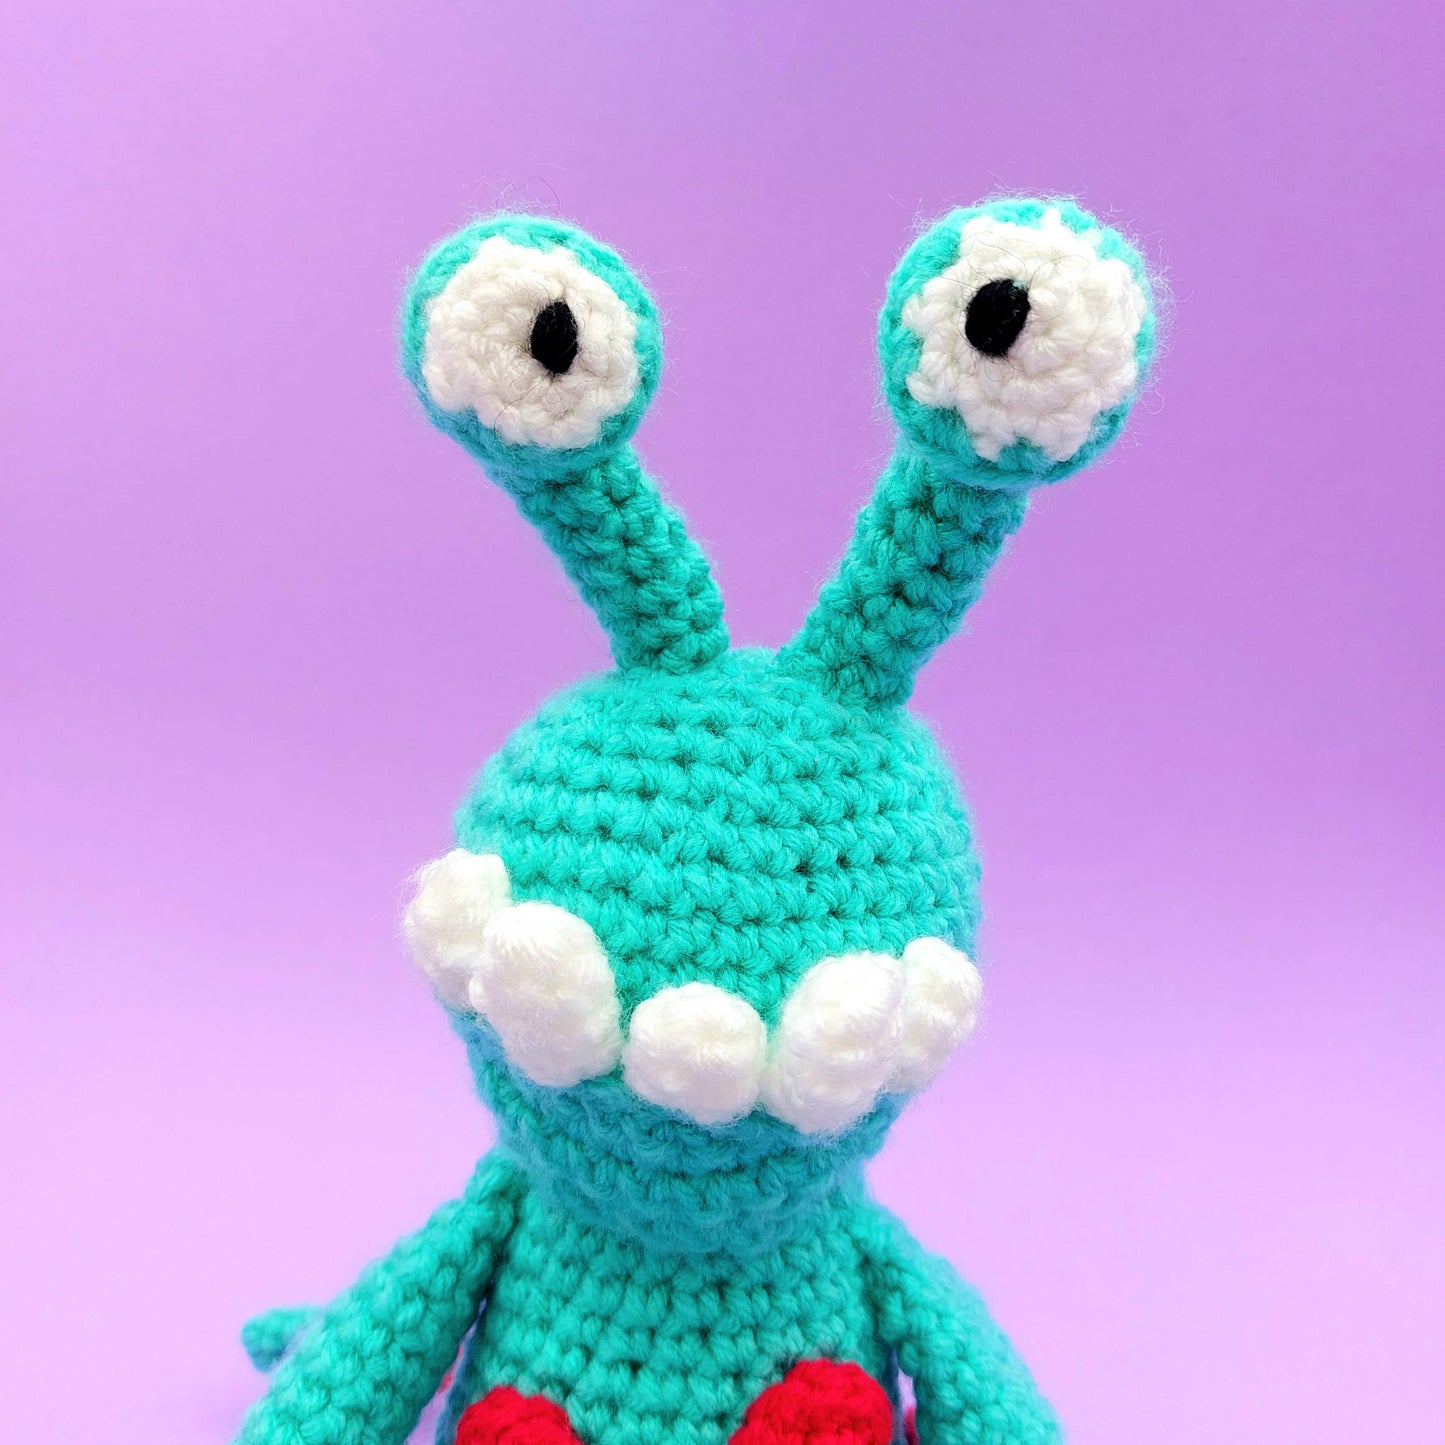 Monty & Myrtle the Monsters Crochet Kit